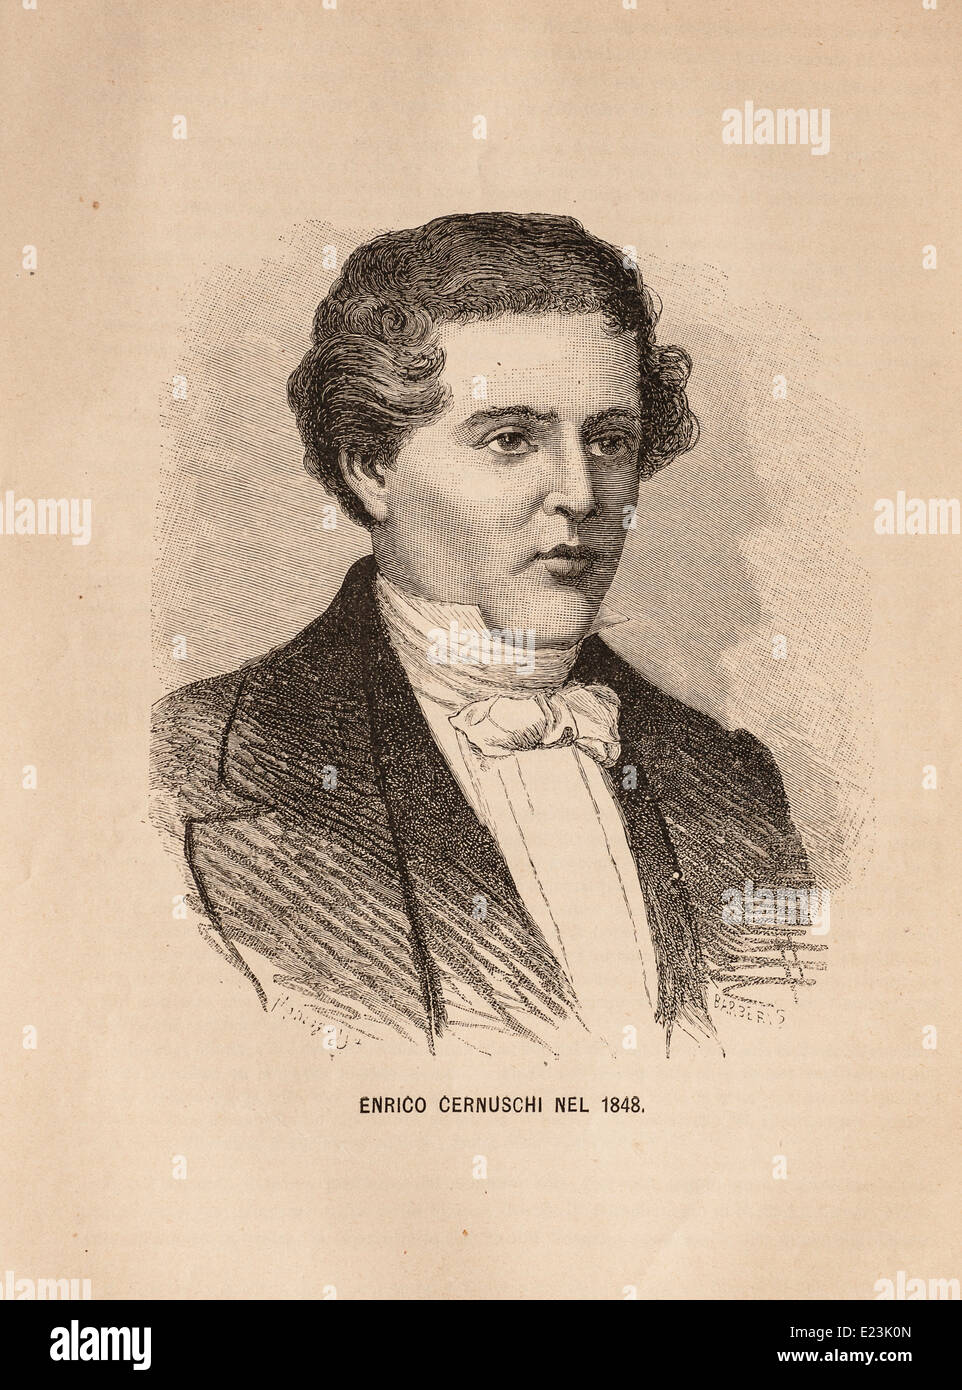 Giuseppe Mazzini From the Book of Jessie W. Mario of Life of Mazzini Portrait of Enrico Cernusch in 1848, Stock Photo